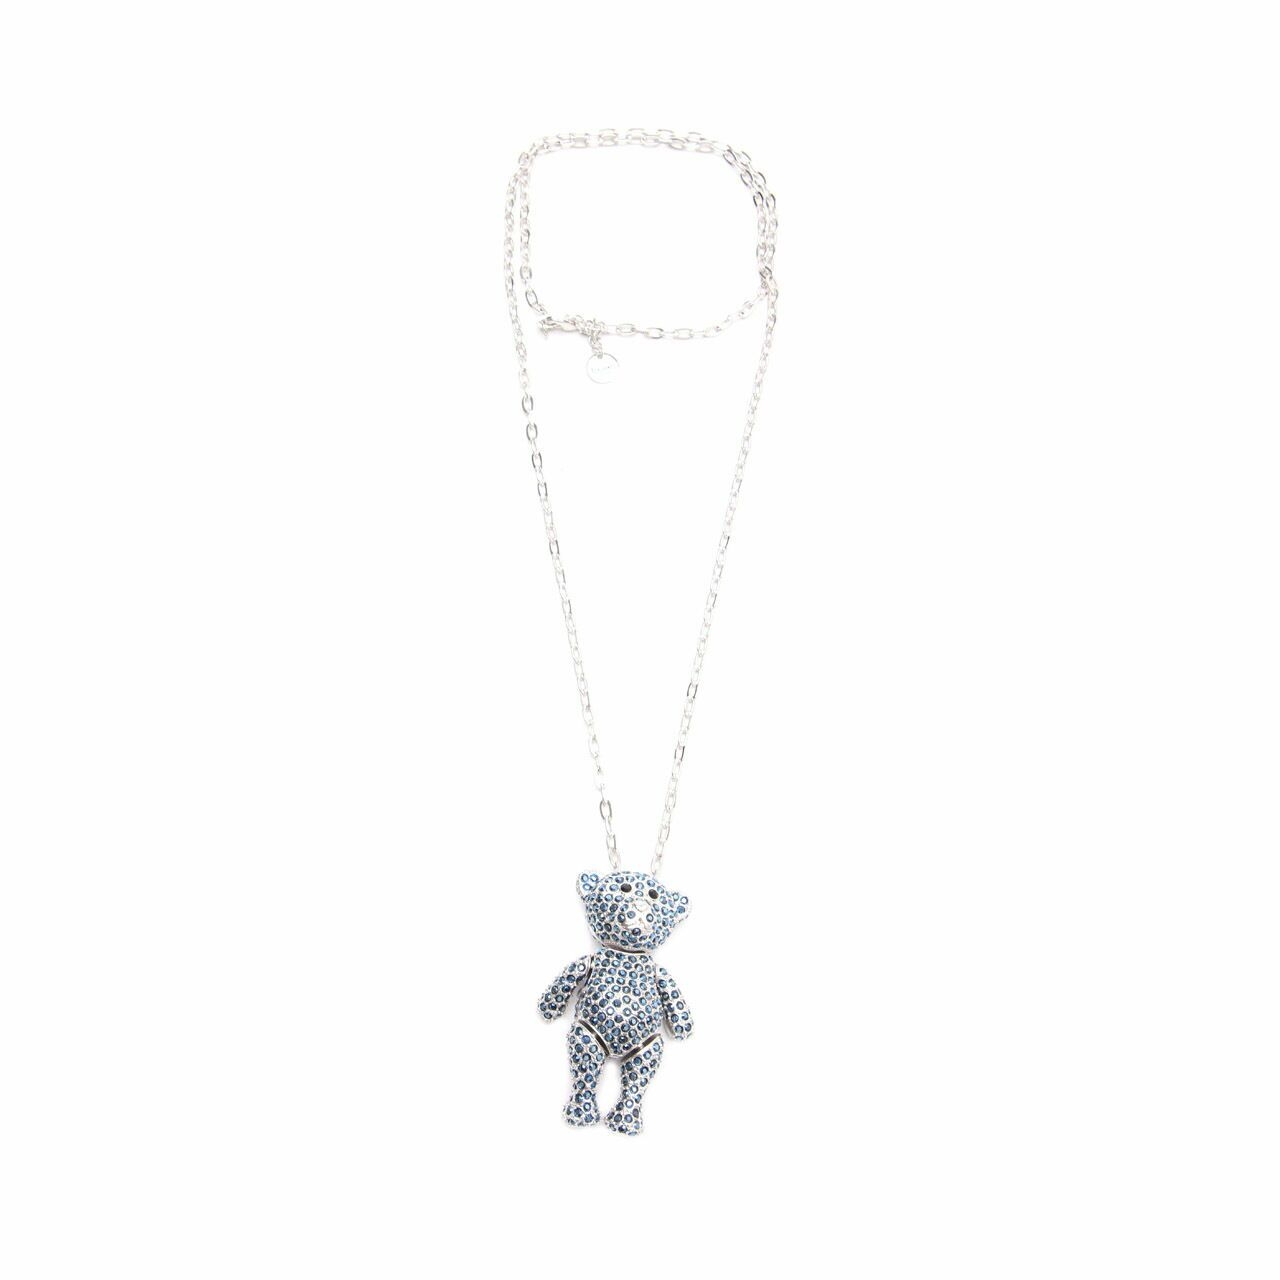 thomas sabo Silver & Blue Teddy Bear Necklace Jewelry